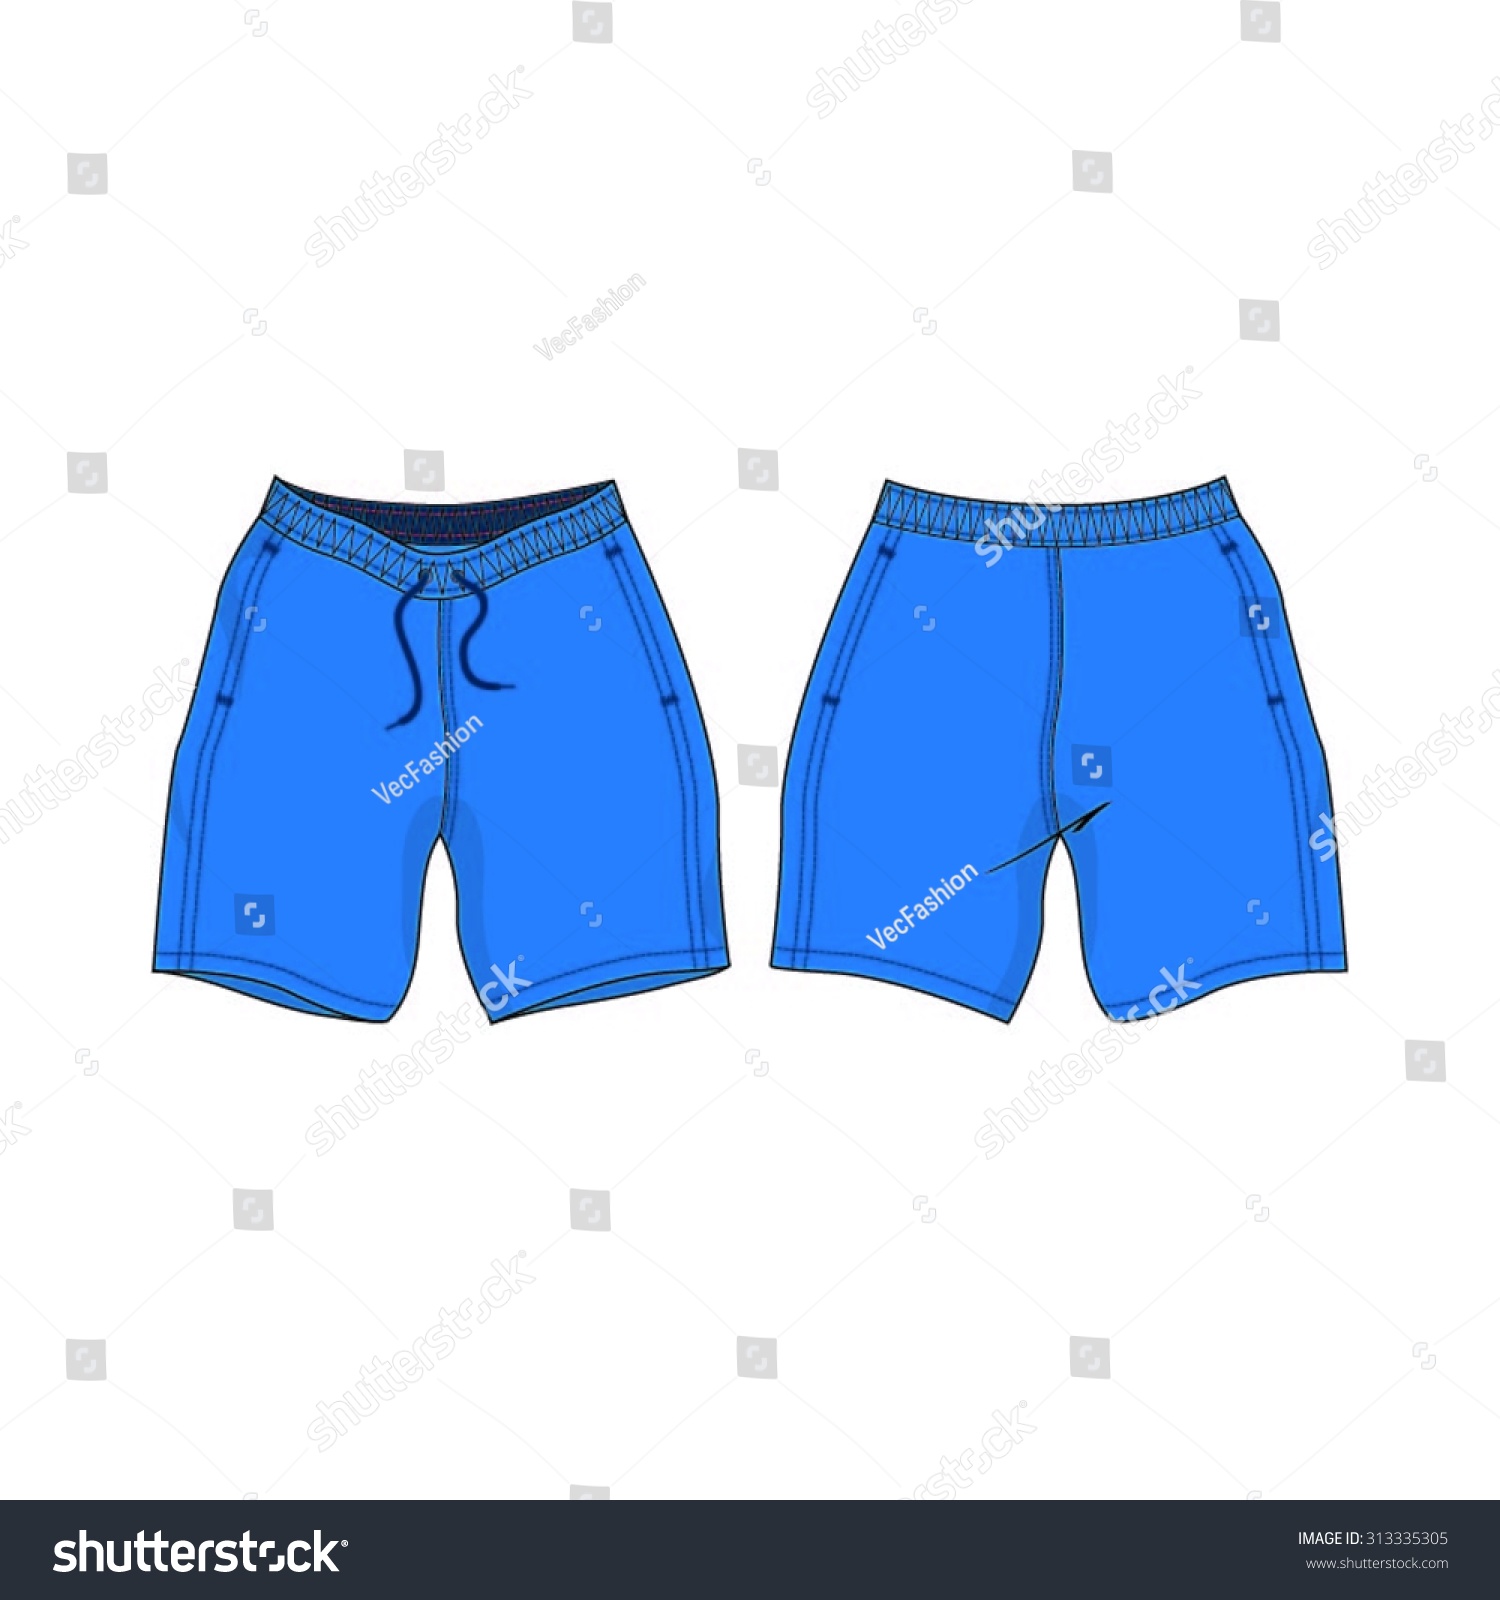 Men Swim Shorts Vector Template - 313335305 : Shutterstock